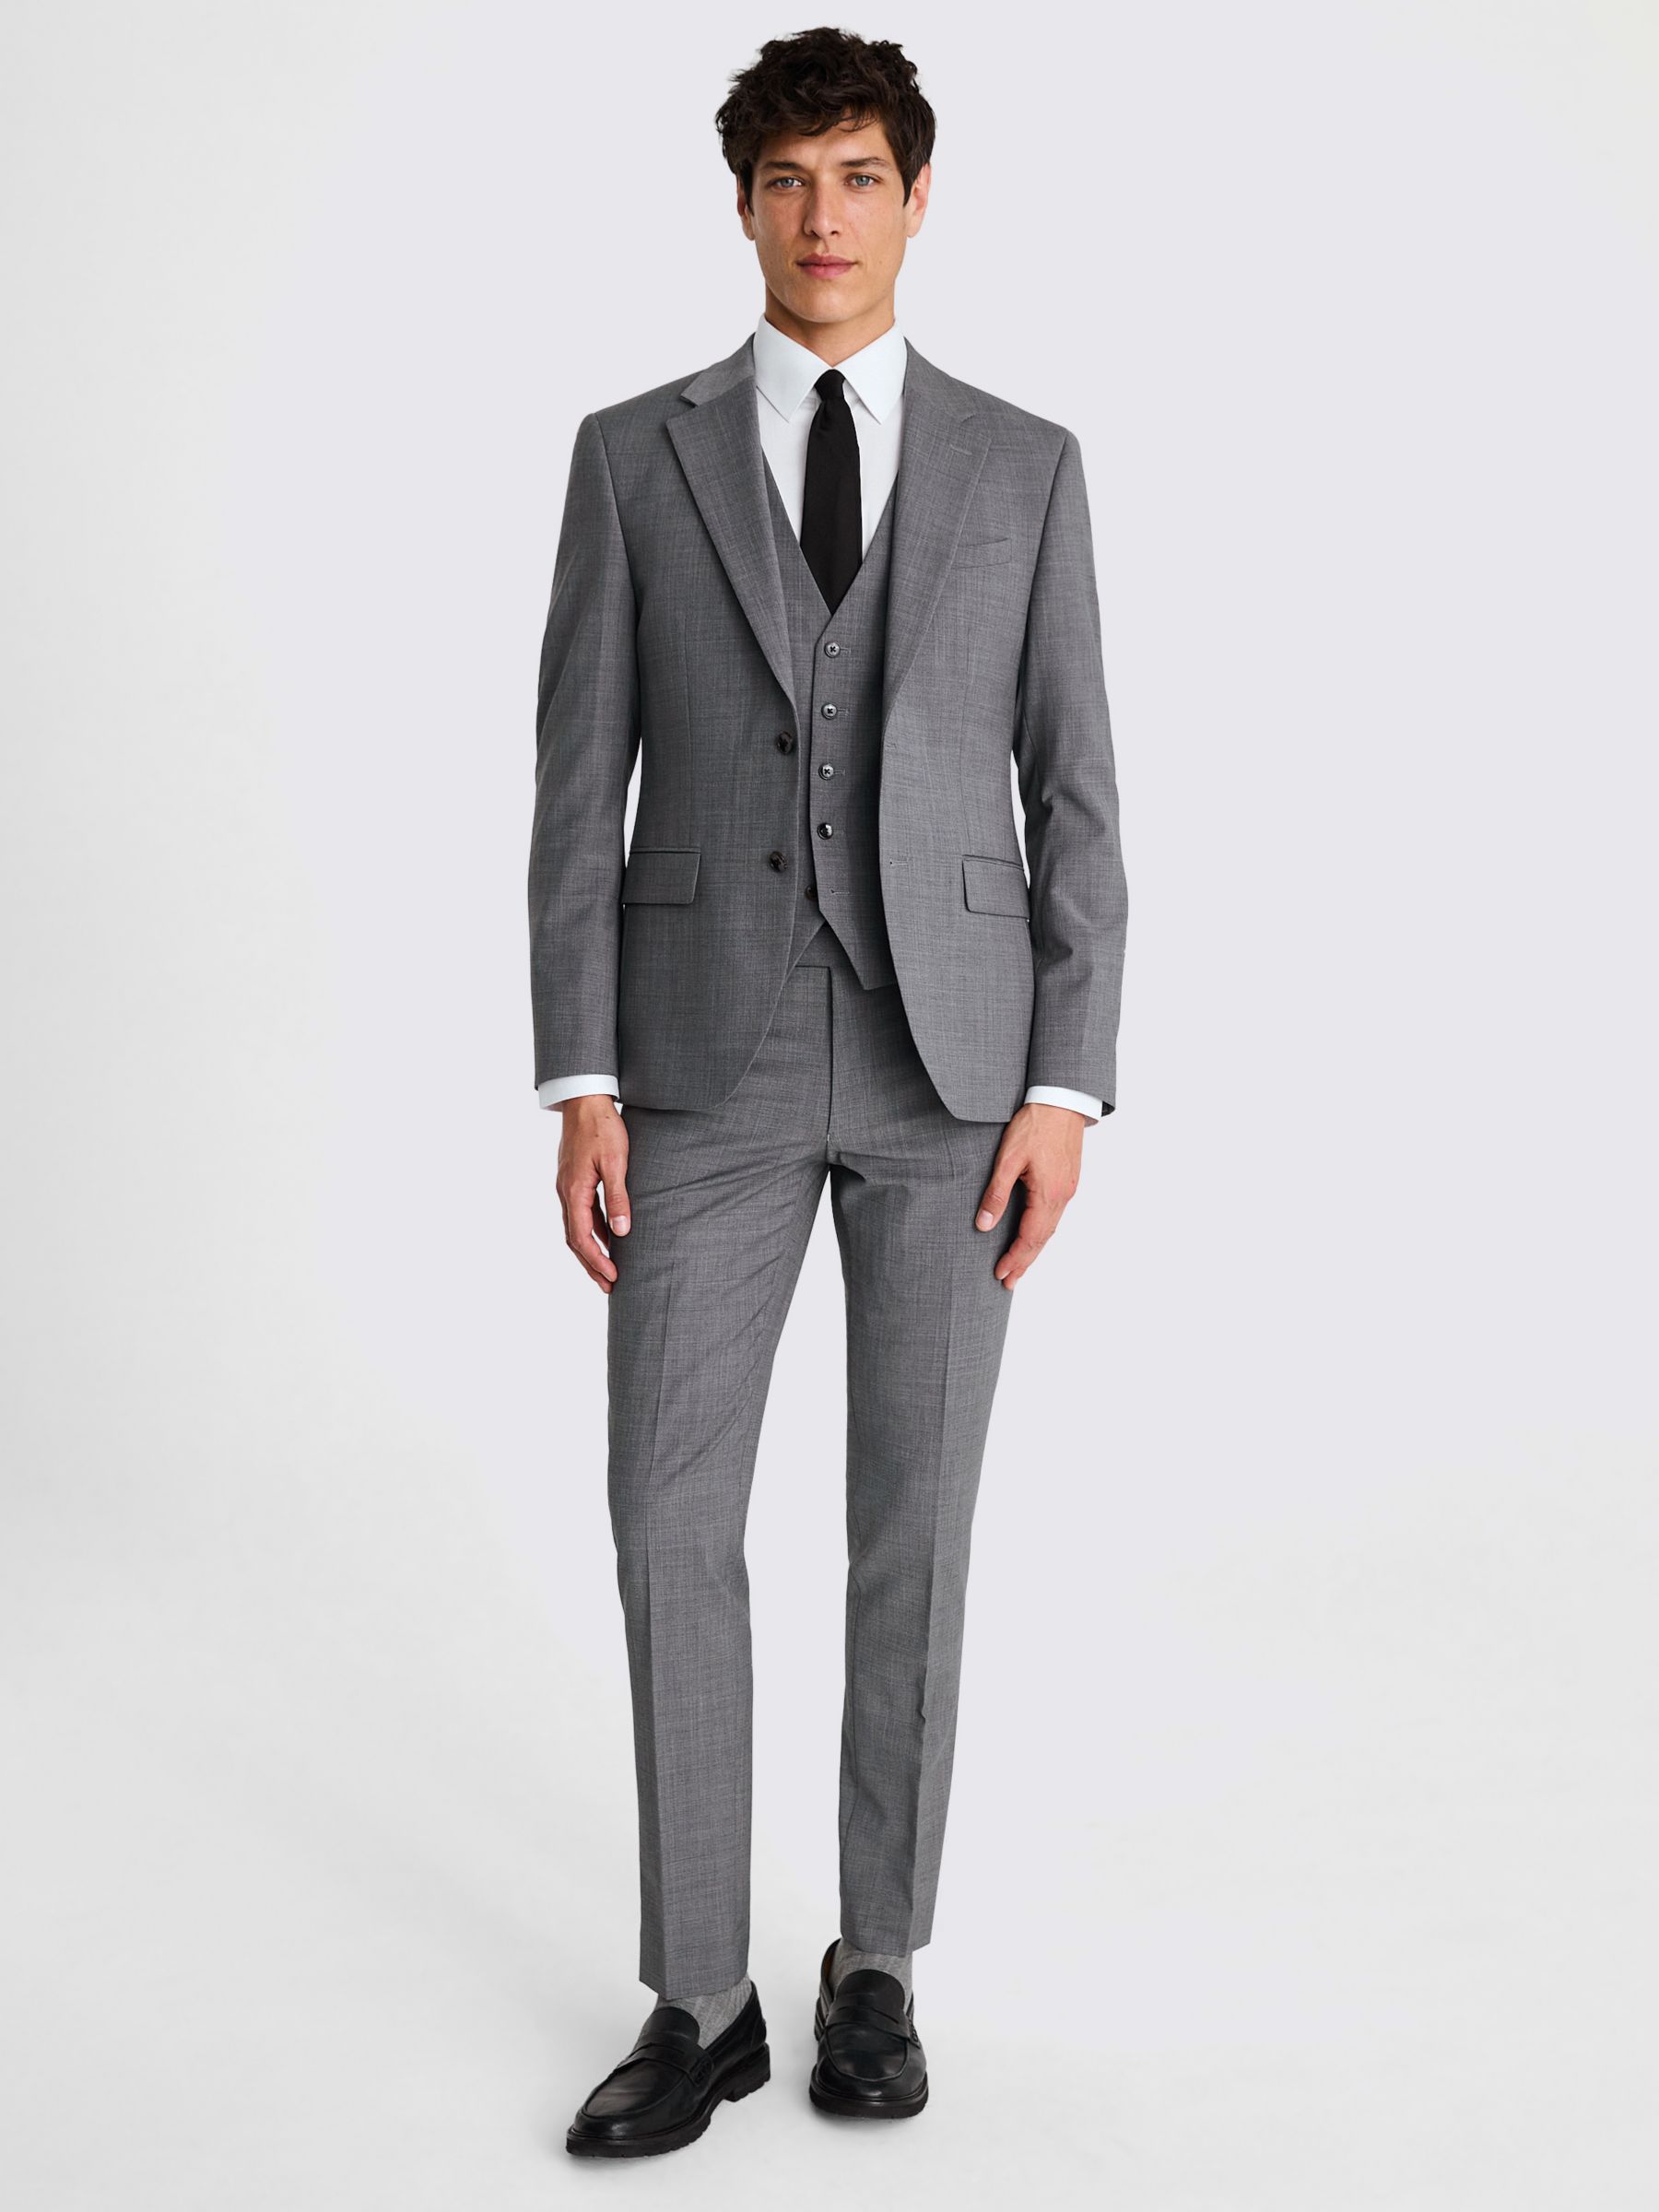 Moss x DKNY Wool Blend Slim Fit Suit Jacket, Grey at John Lewis & Partners